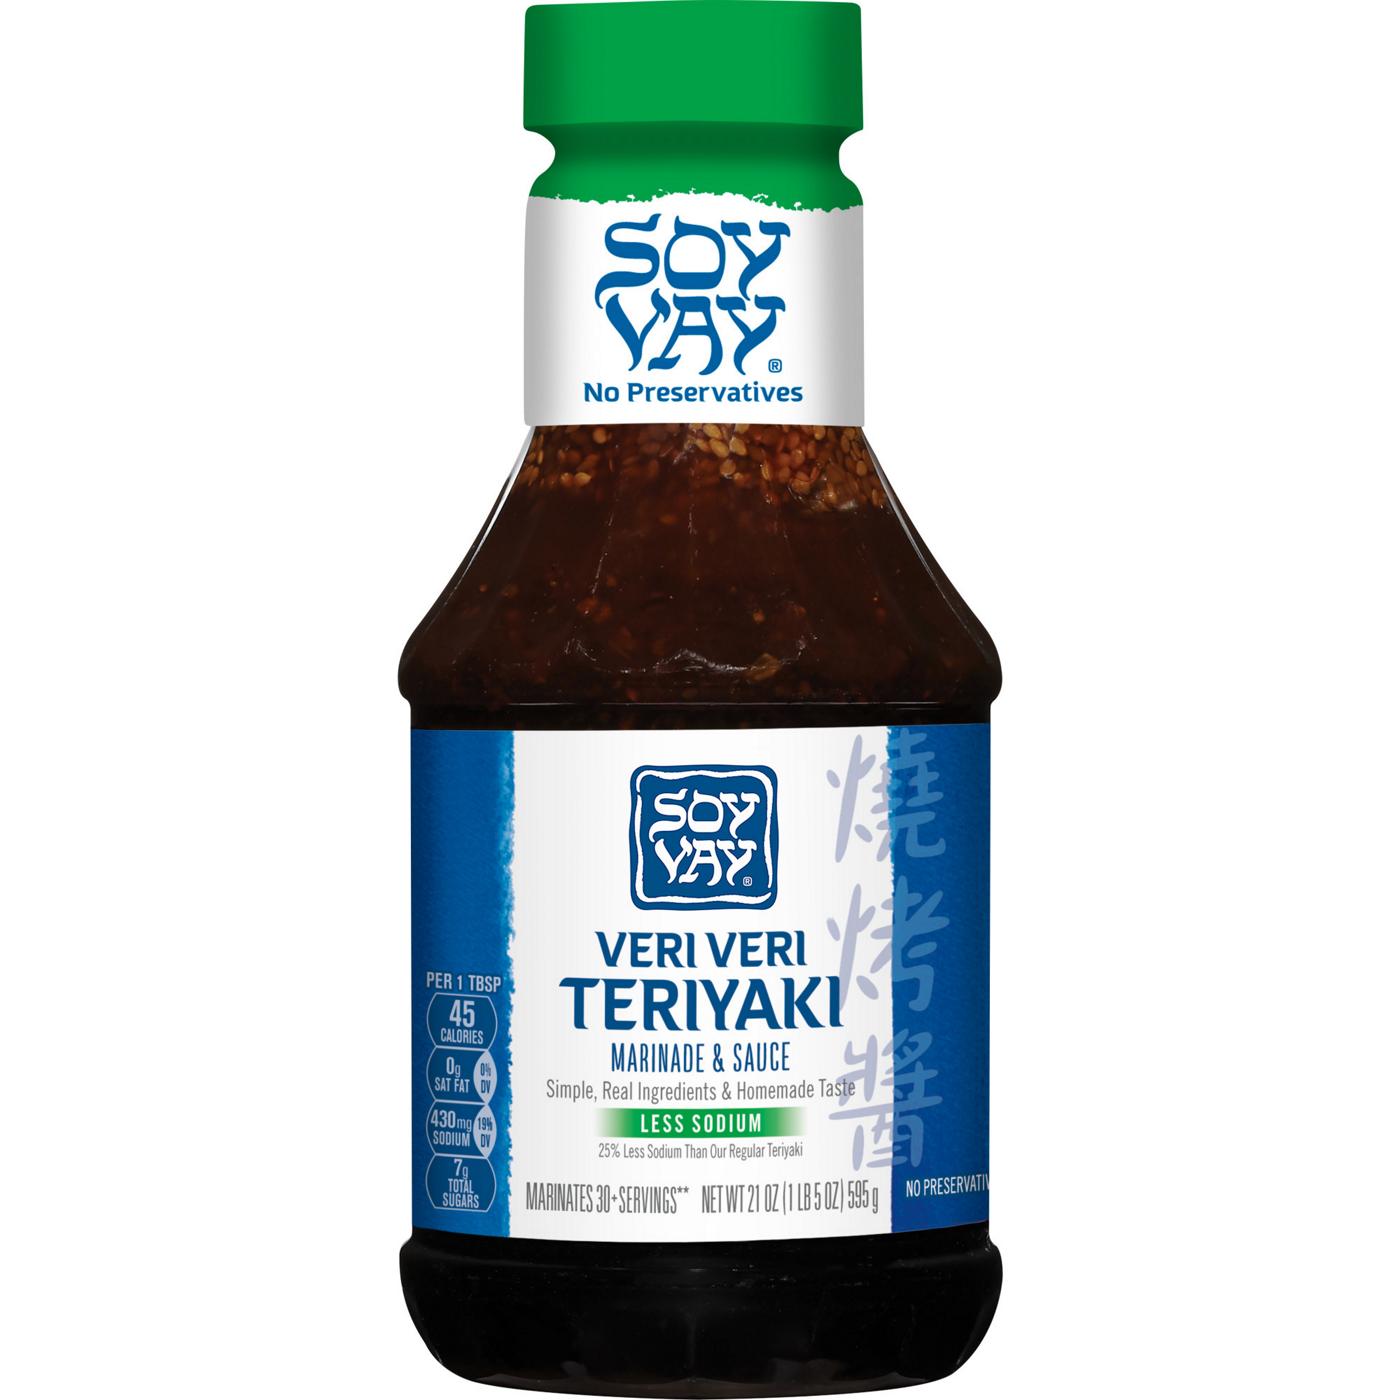 Soy Vay Veri Veri Teriyaki Less Sodium Marinade and Sauce; image 1 of 2